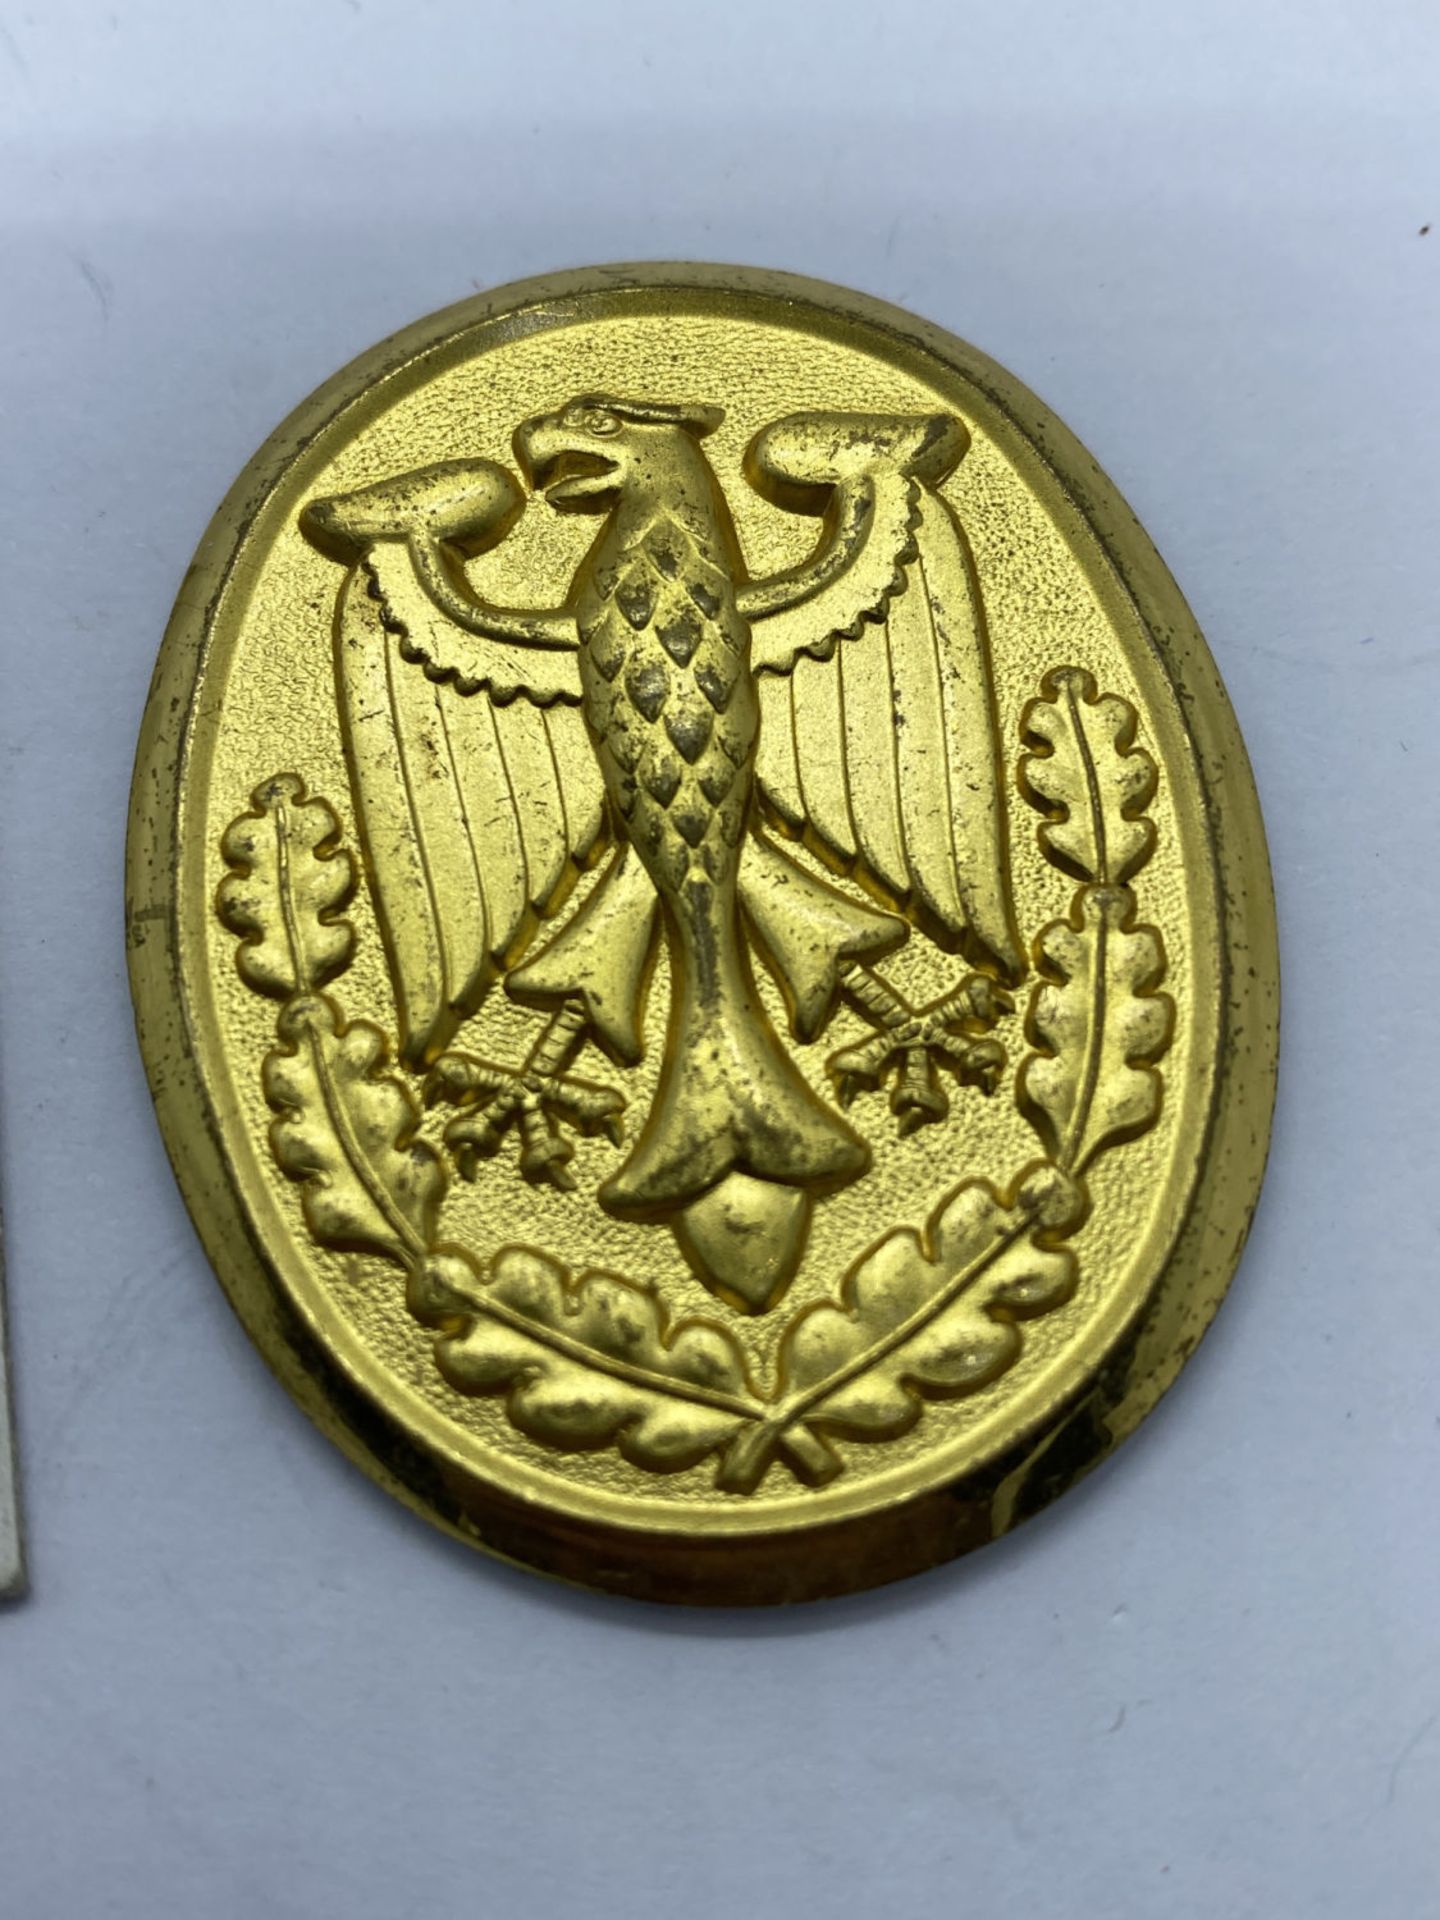 VINTAGE WORLD WAR 2 (WWII) GERMAN MARKSMAN CAP BADGE EAGLE GOLD TONE AND 1939 GERMAN PFENNIG COIN - Image 3 of 5